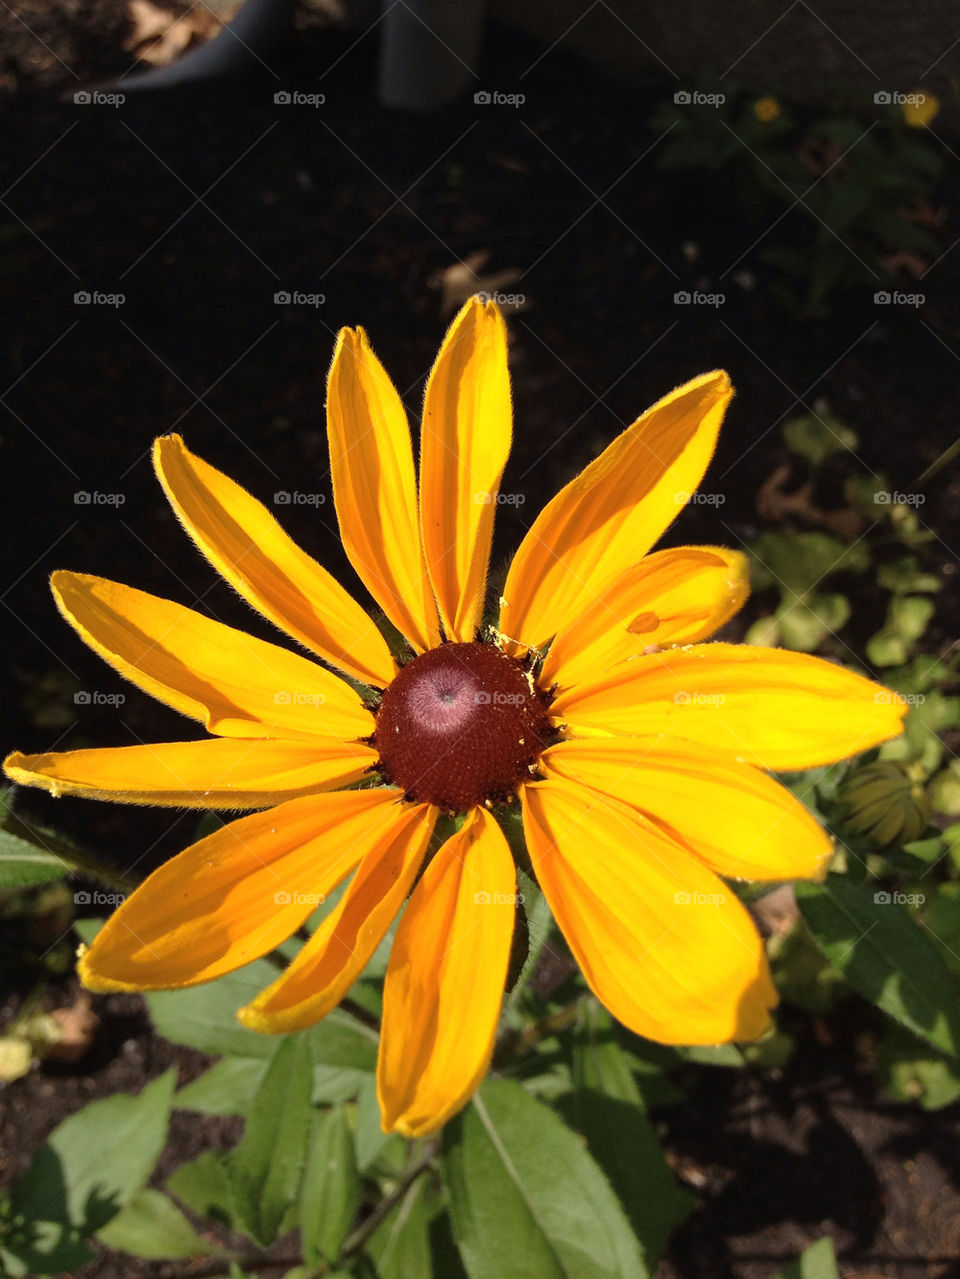 yellow flower beautiful daisy by sarali11